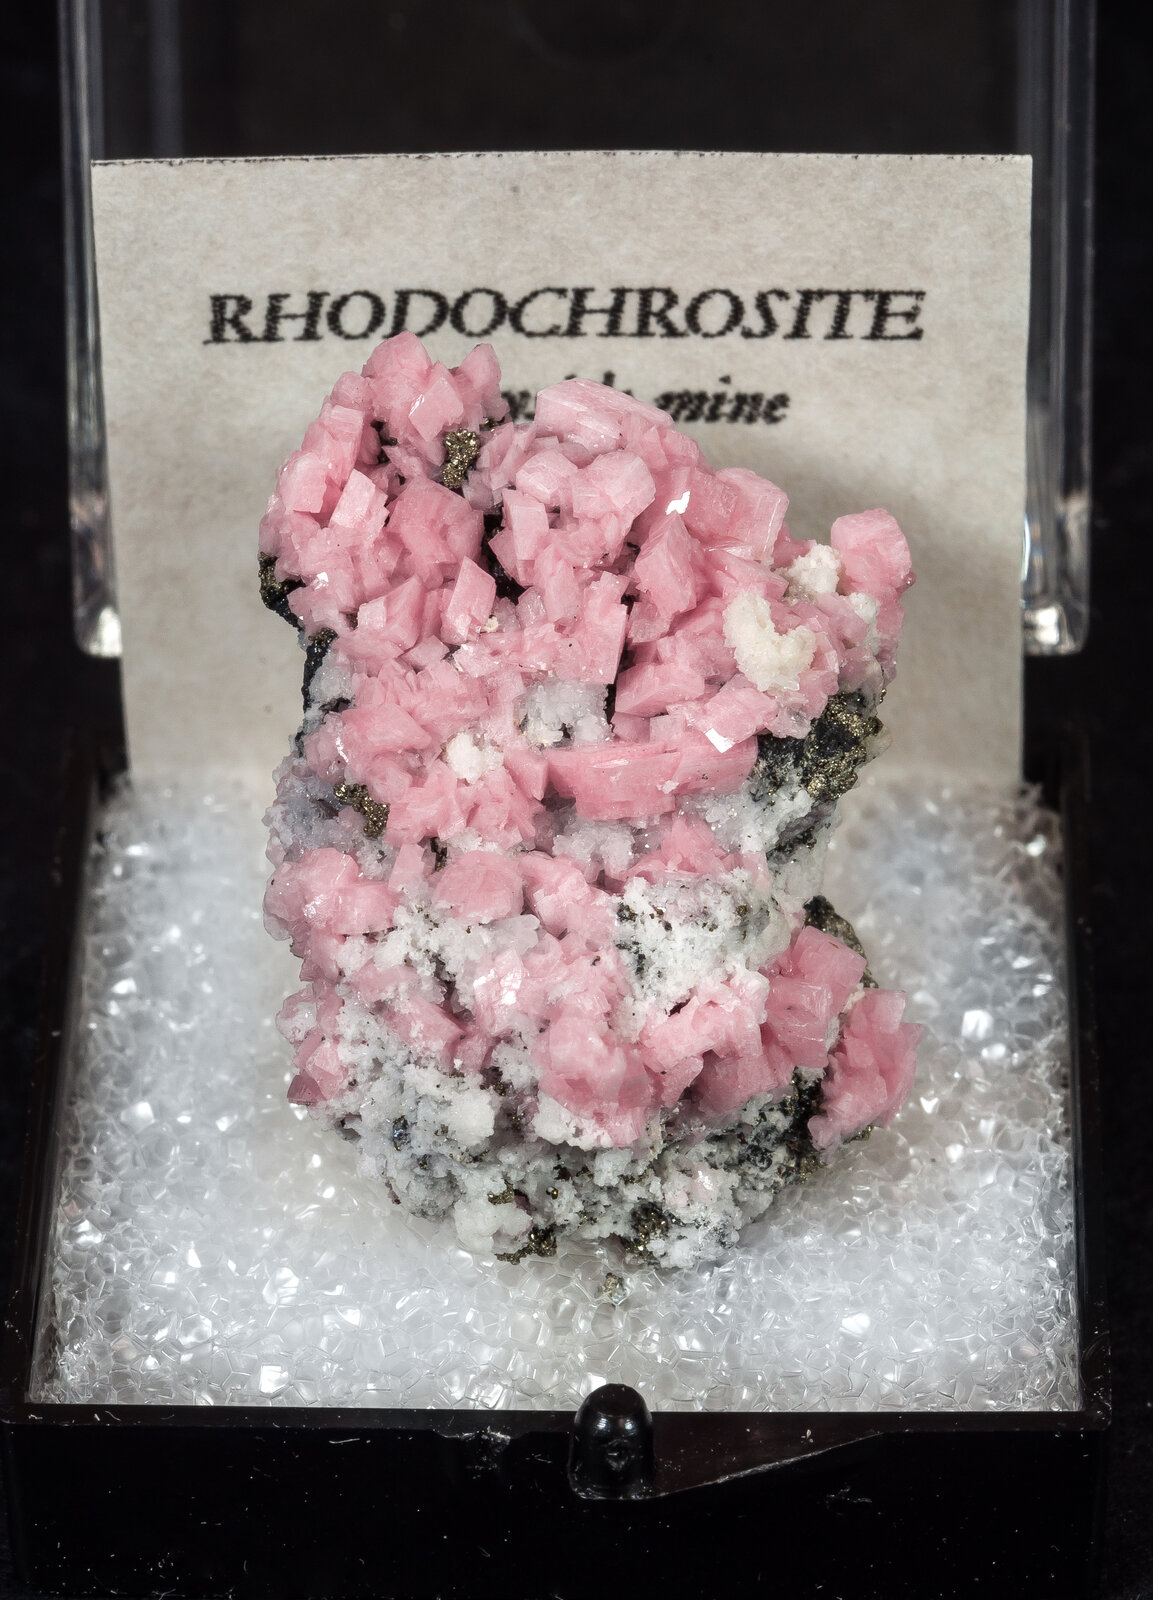 specimens/s_imagesAN3/Rhodochrosite-TBB64AN3f1.jpg